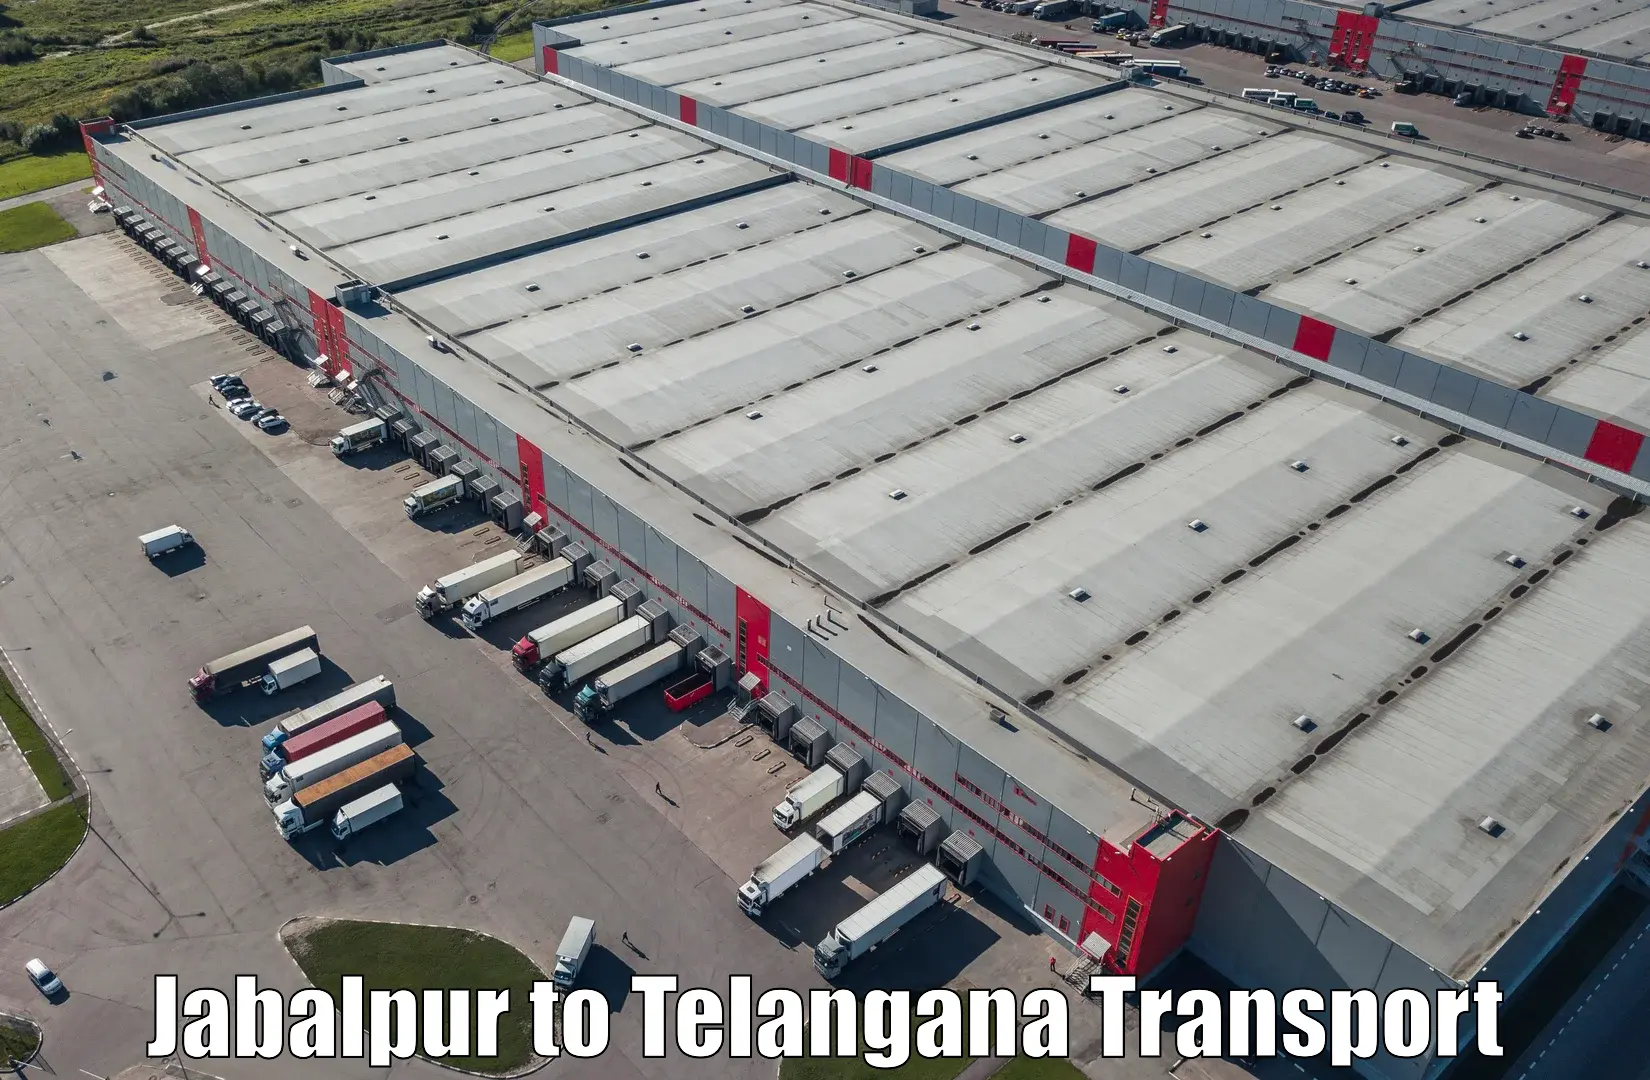 Transport in sharing in Jabalpur to Nalgonda